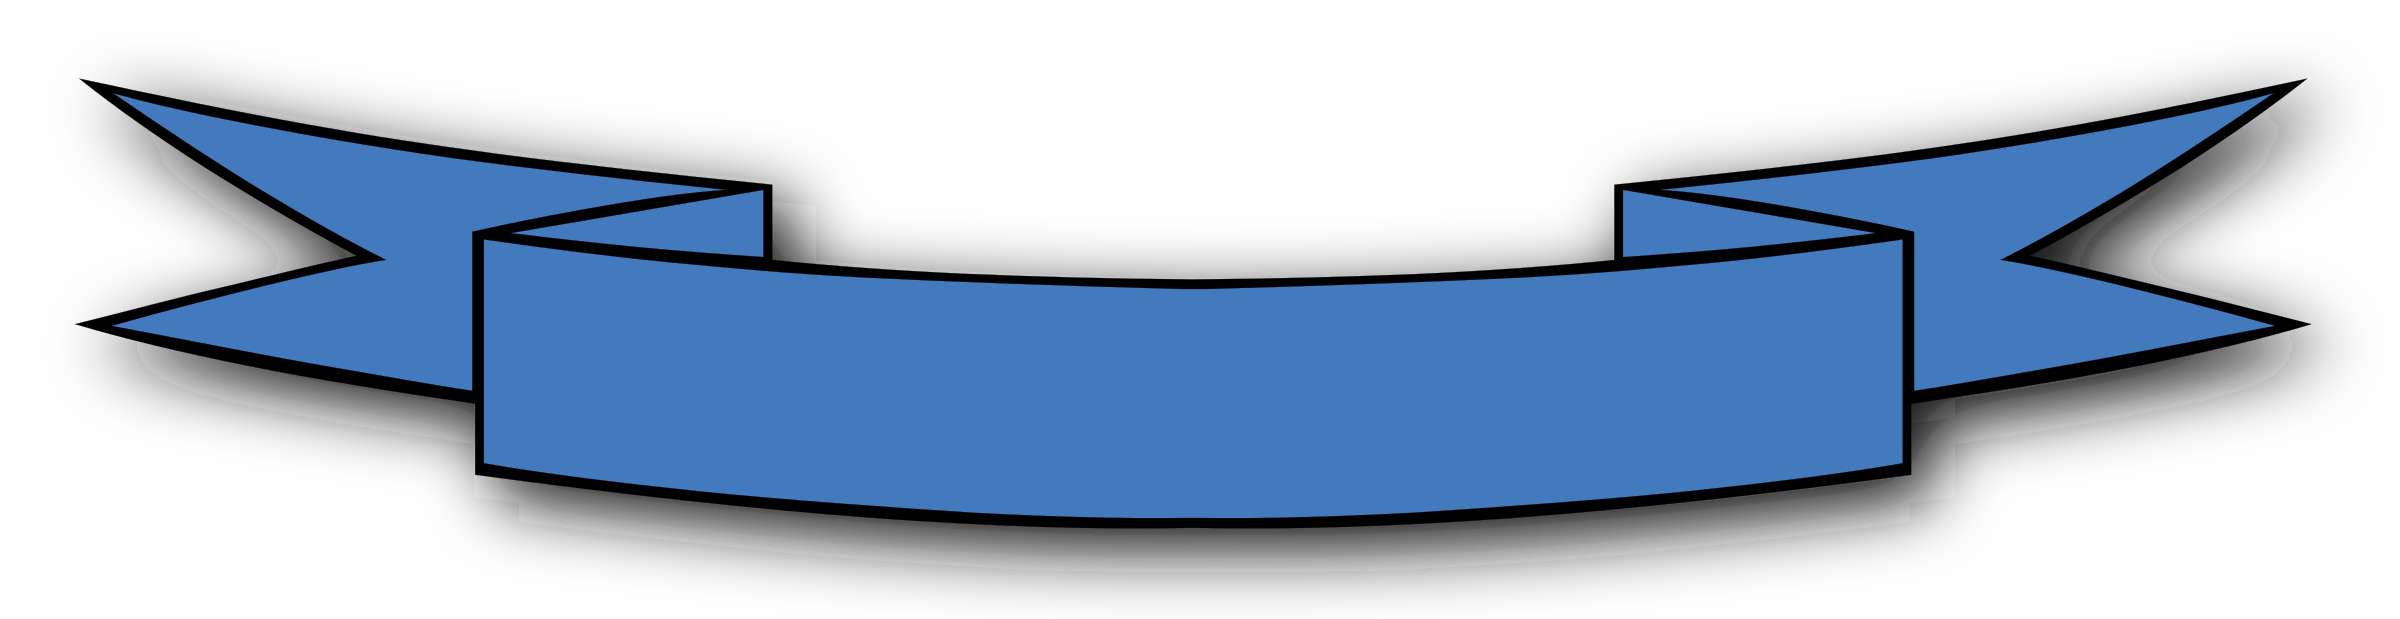 Blue Ribbon Banner White Transparent, Blue Ribbon Banner, Ribbon